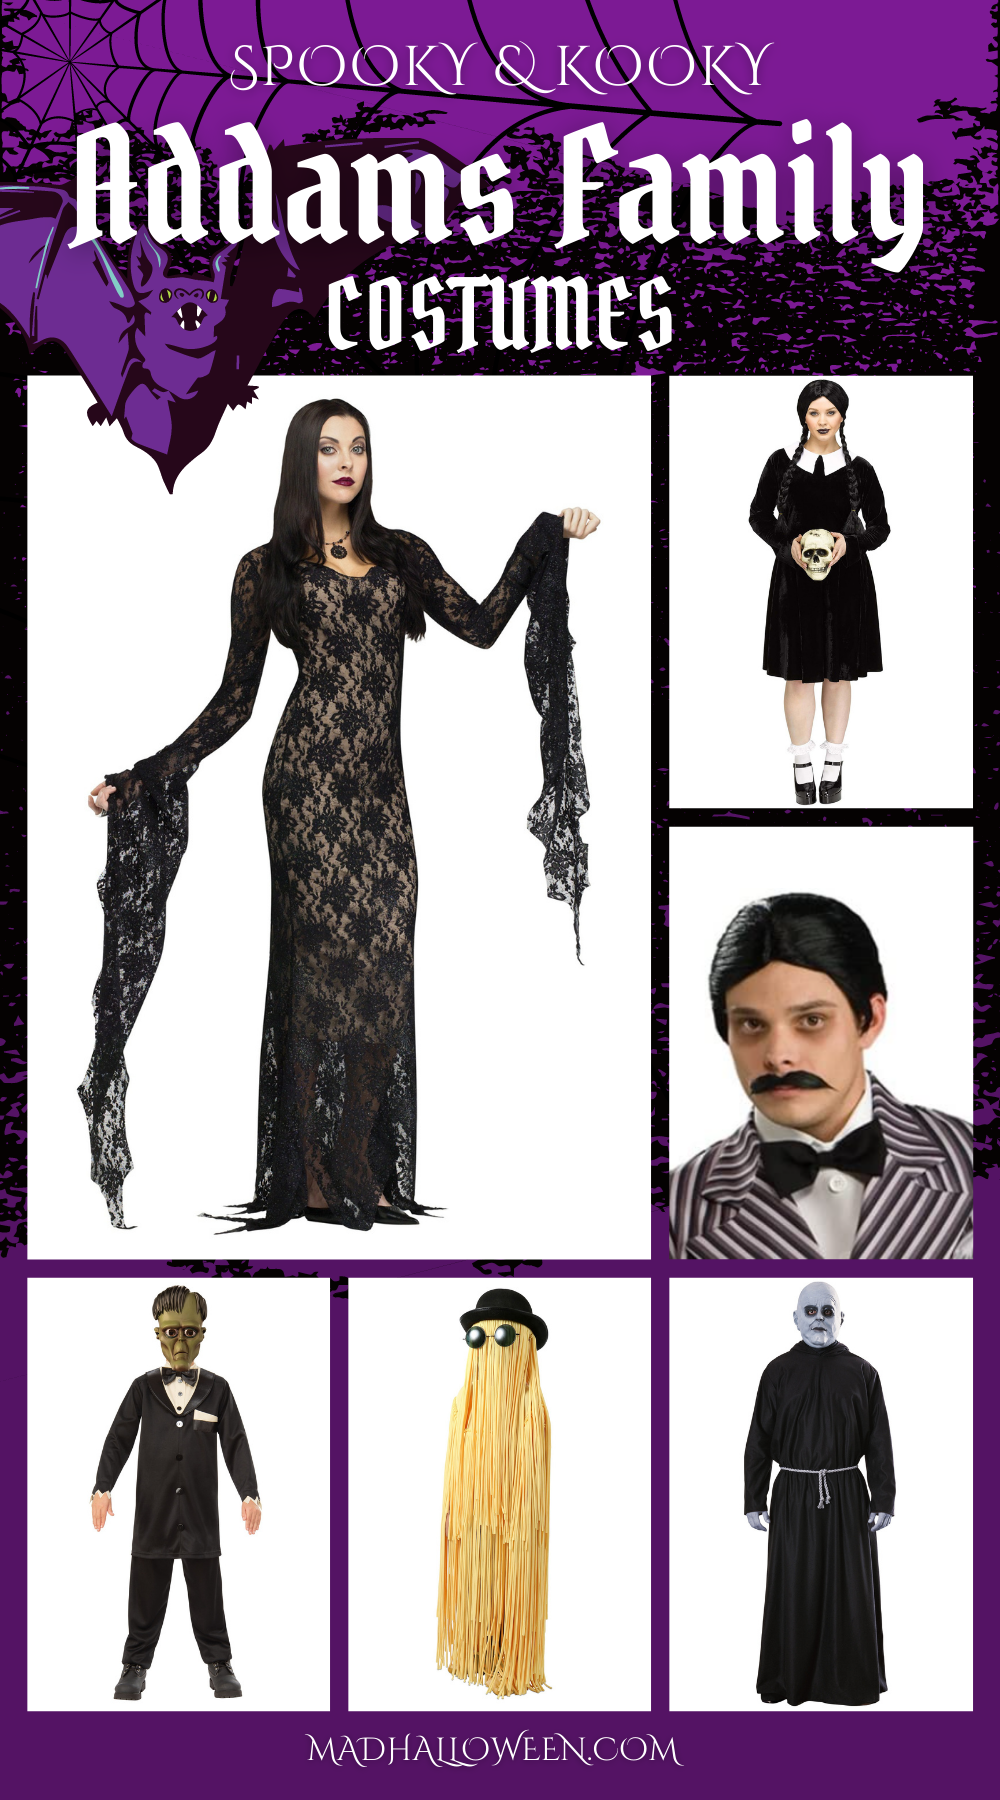 Spooky & Kooky Addams Family Costumes - Mad Halloween